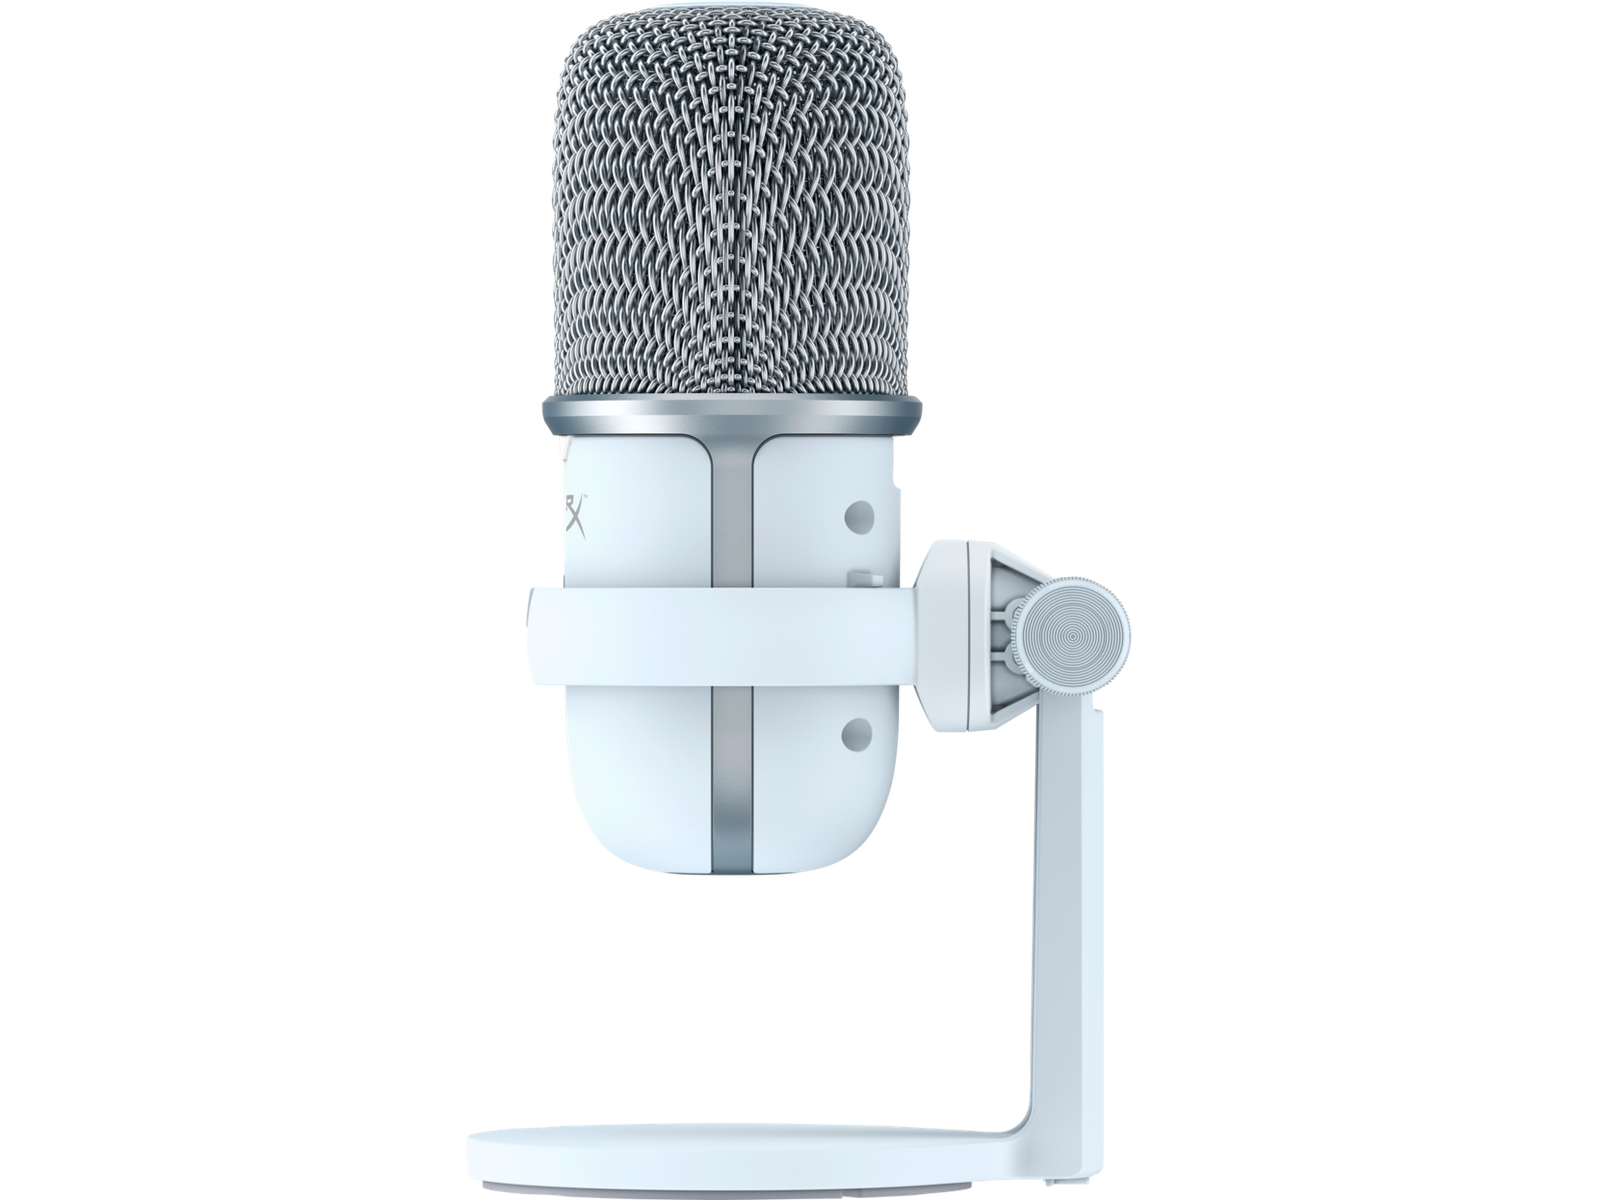 SOLOCAST 519T2AA WHITE Mikrofon, USB Weiß HYPERX